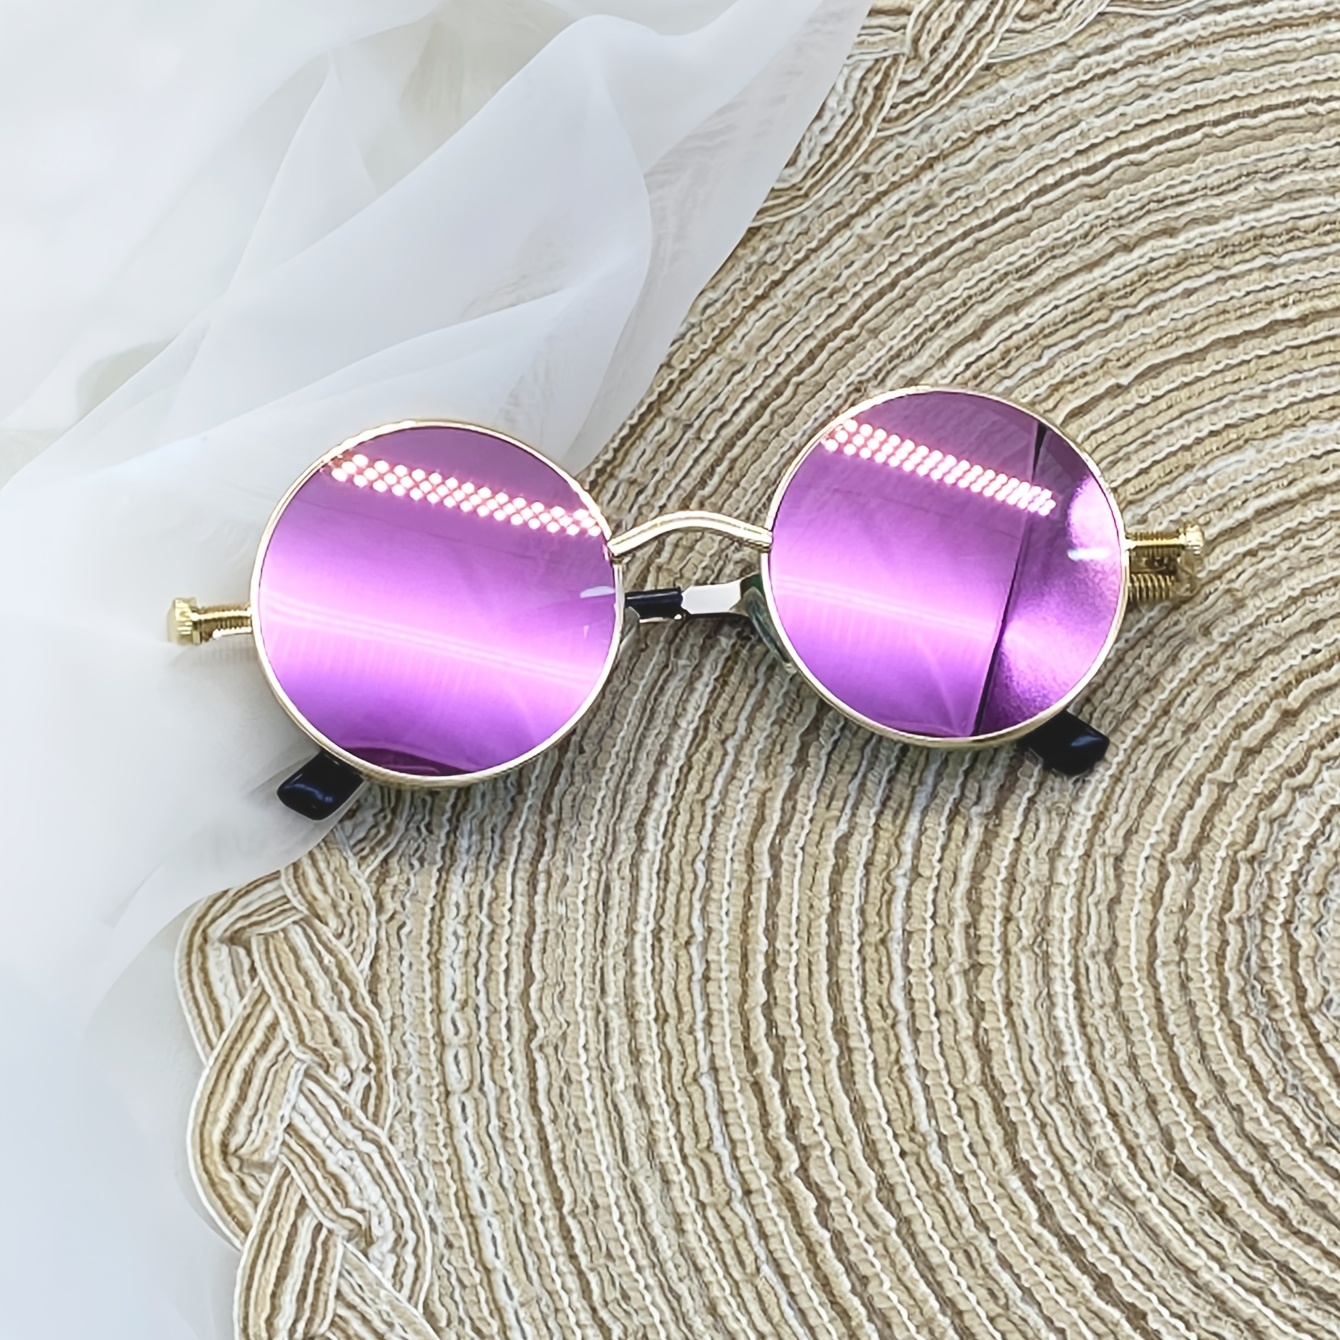 Round Circle Frame Sunglasses Thin Metal Spring Hinge Mirror Lens